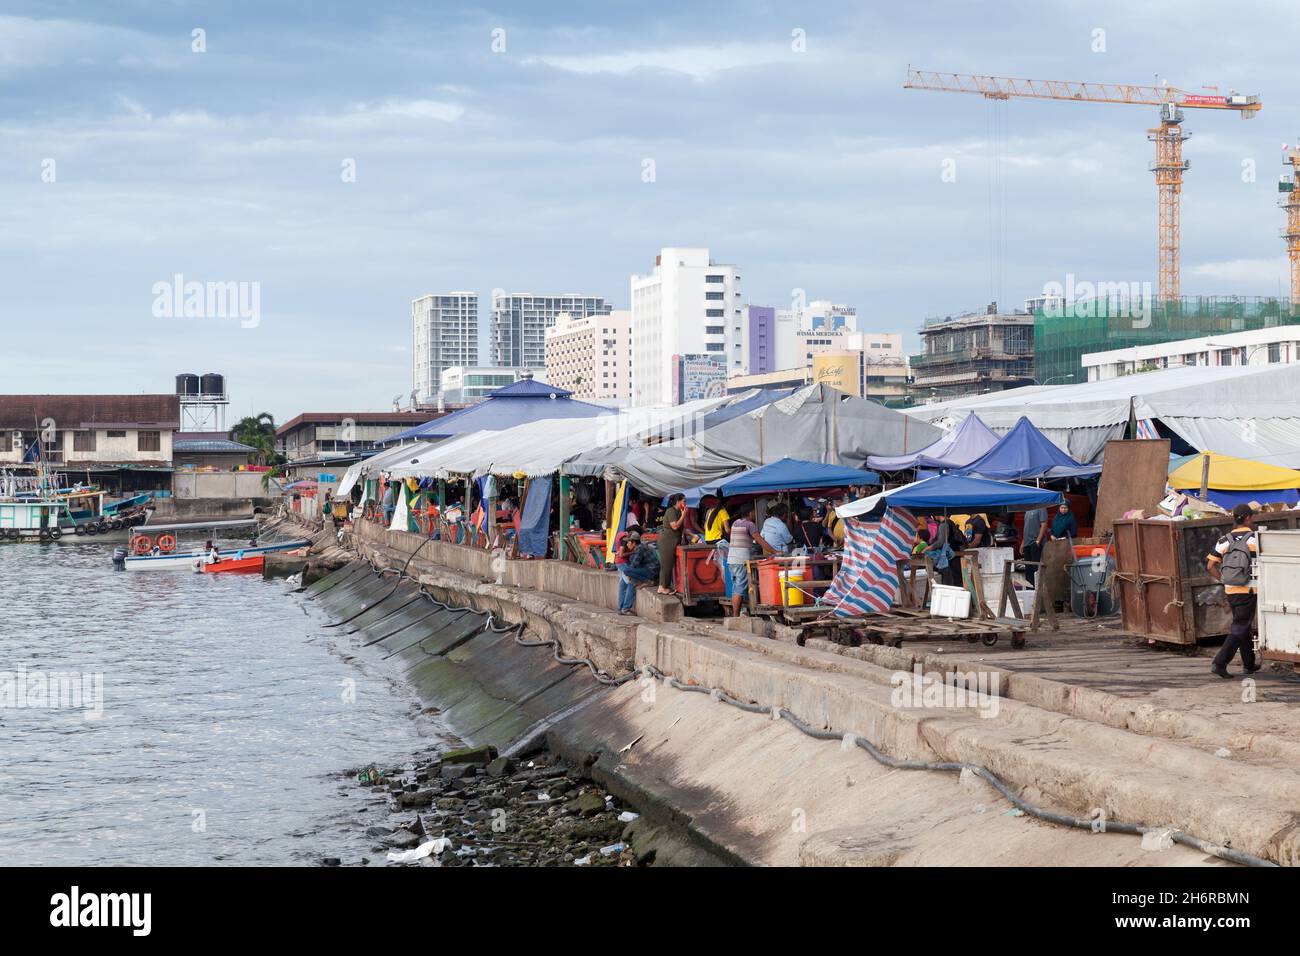 Kota Kinabalu, Malaysia - March 23, 2019: Seaside view of the KK Fish Market on a sunny day, ordinary people visit the marketplace Stock Photo